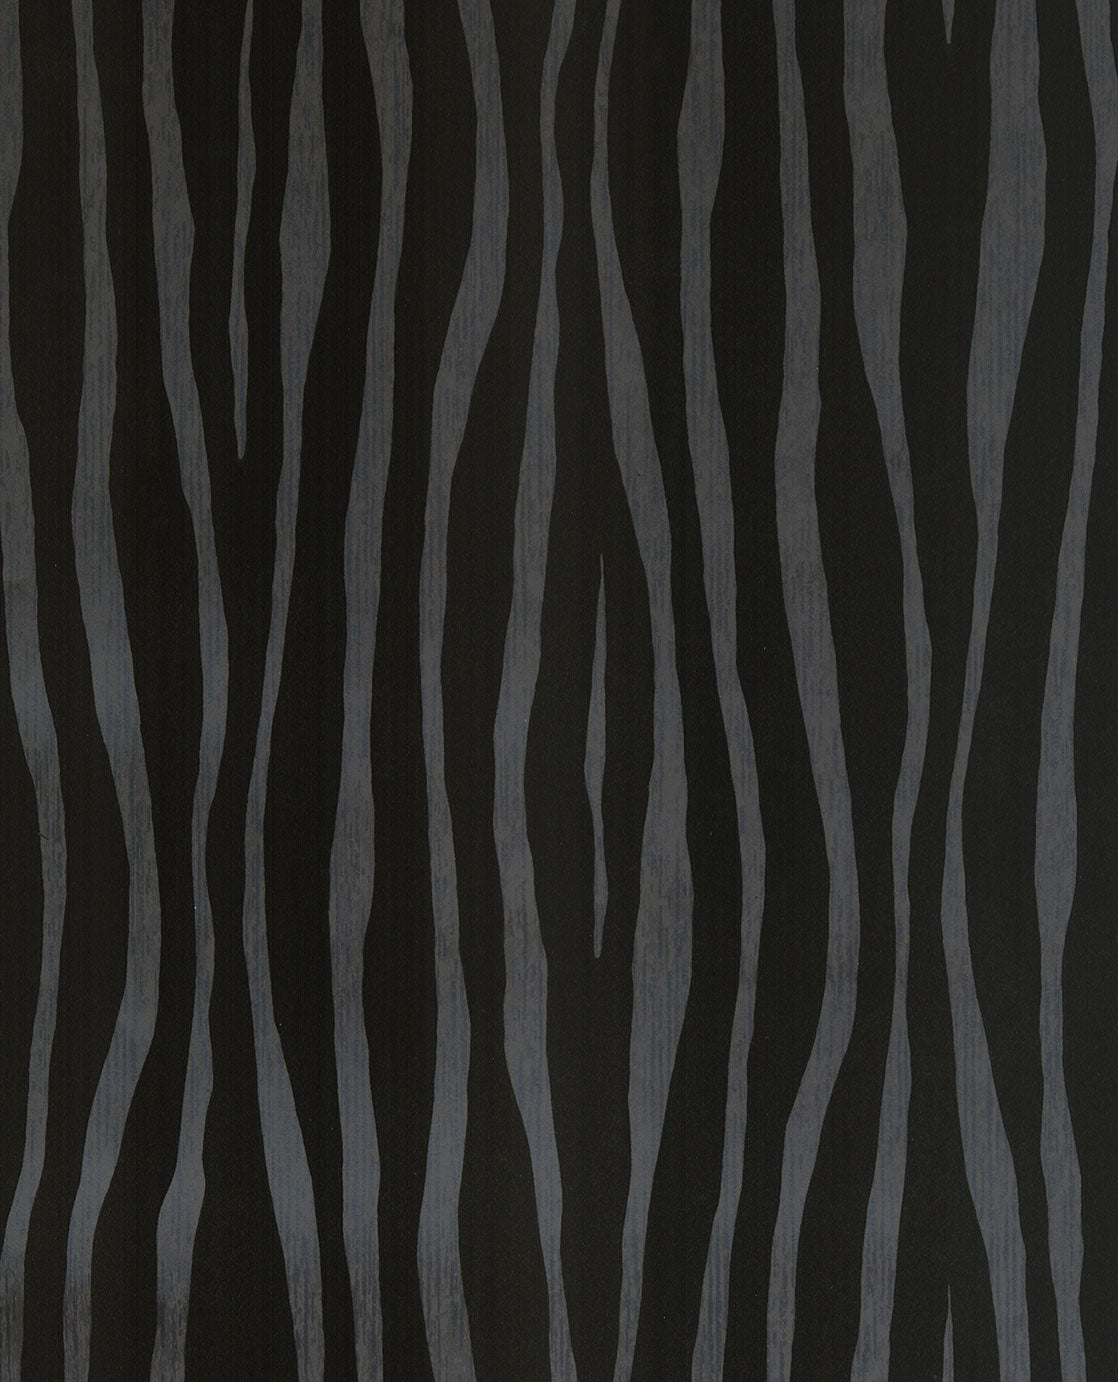 Skin Flock Zebra Stripes wallpaper